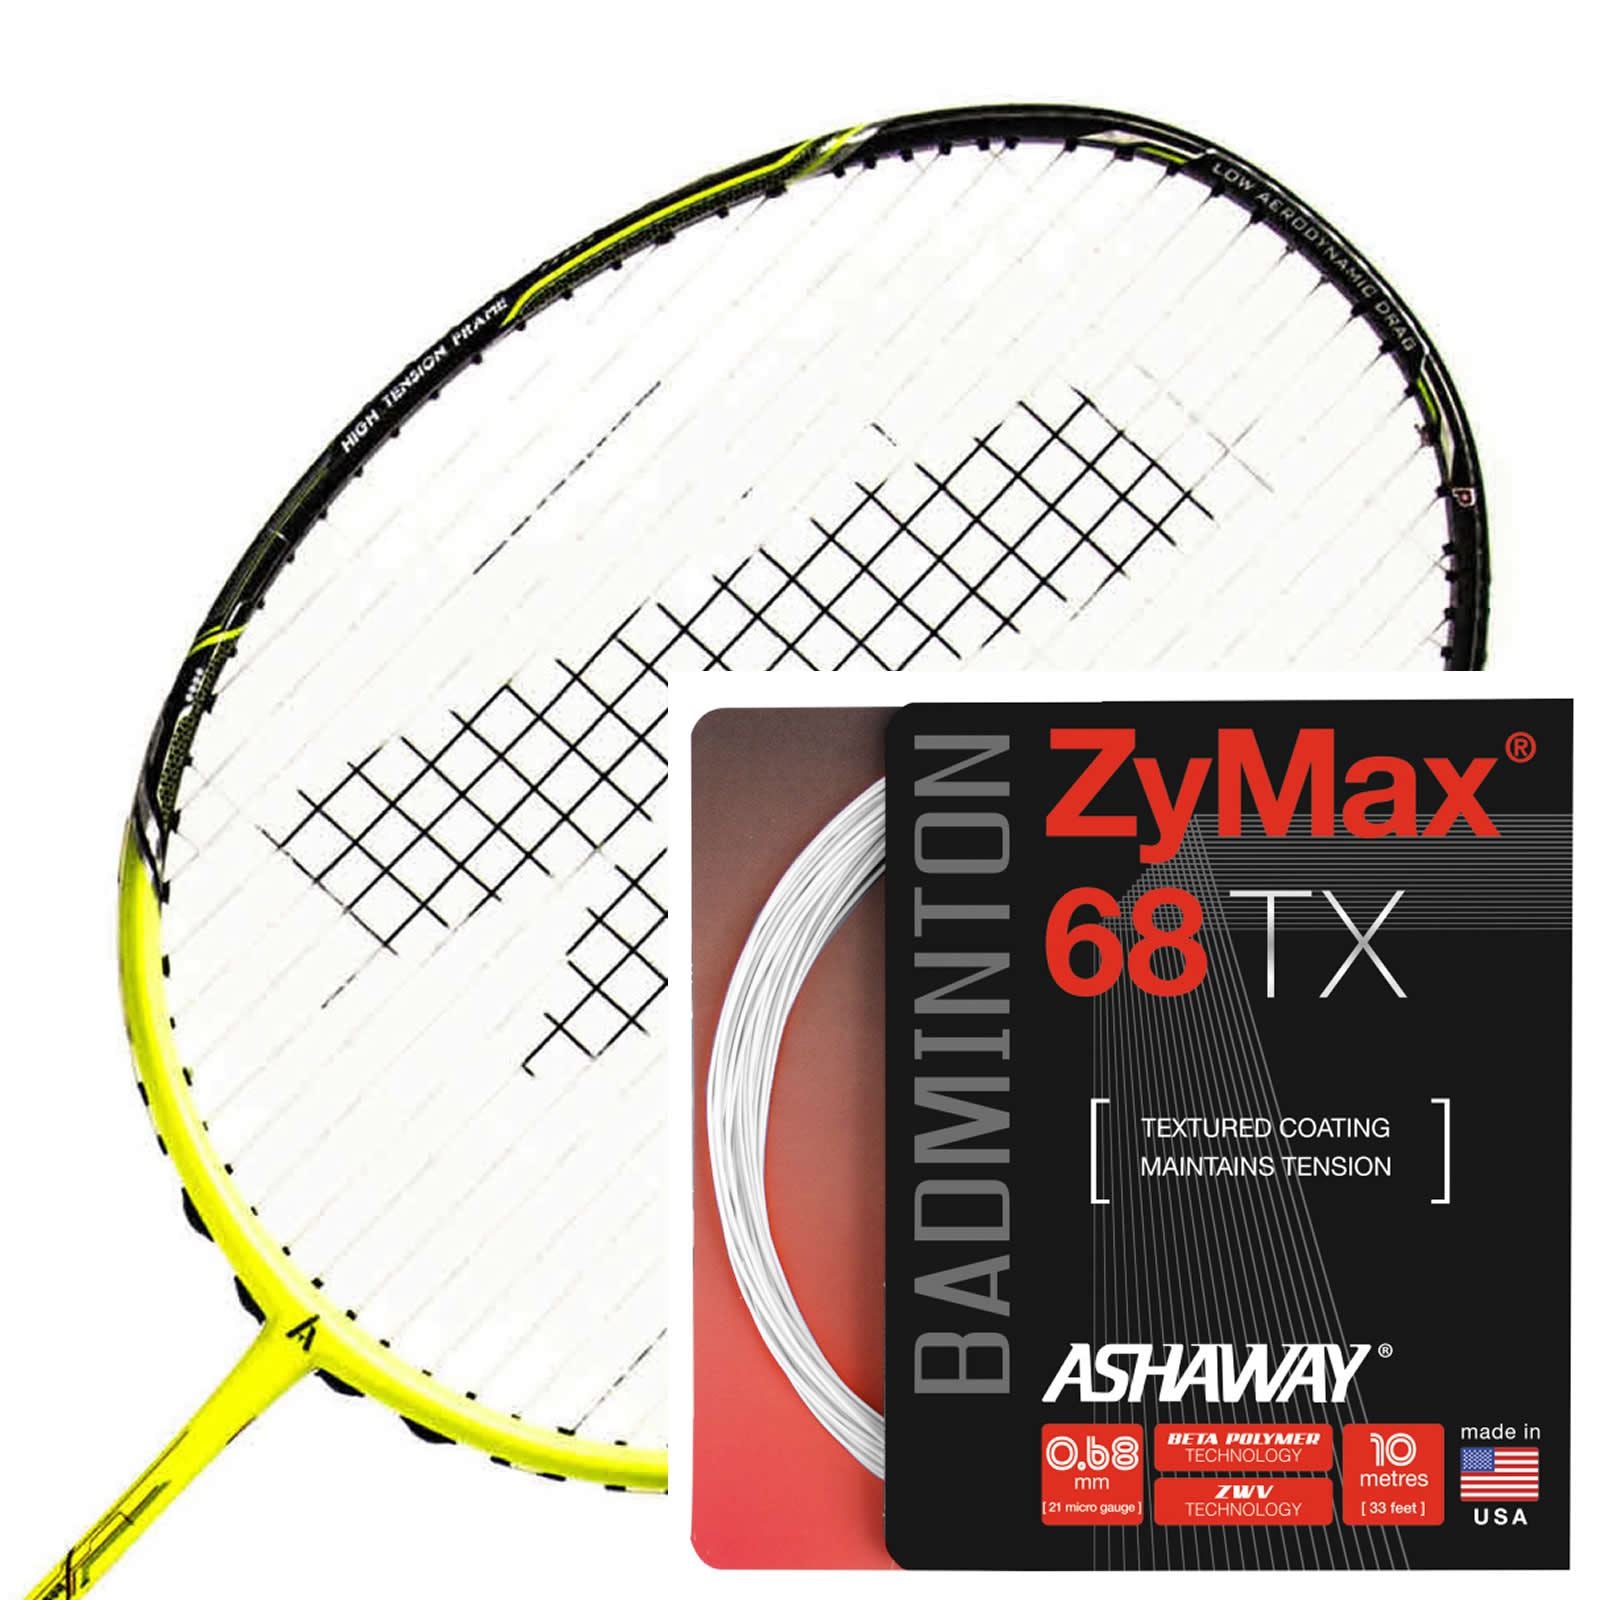 Ashaway Zymax 68 TX Badminton String Reel (200m) White